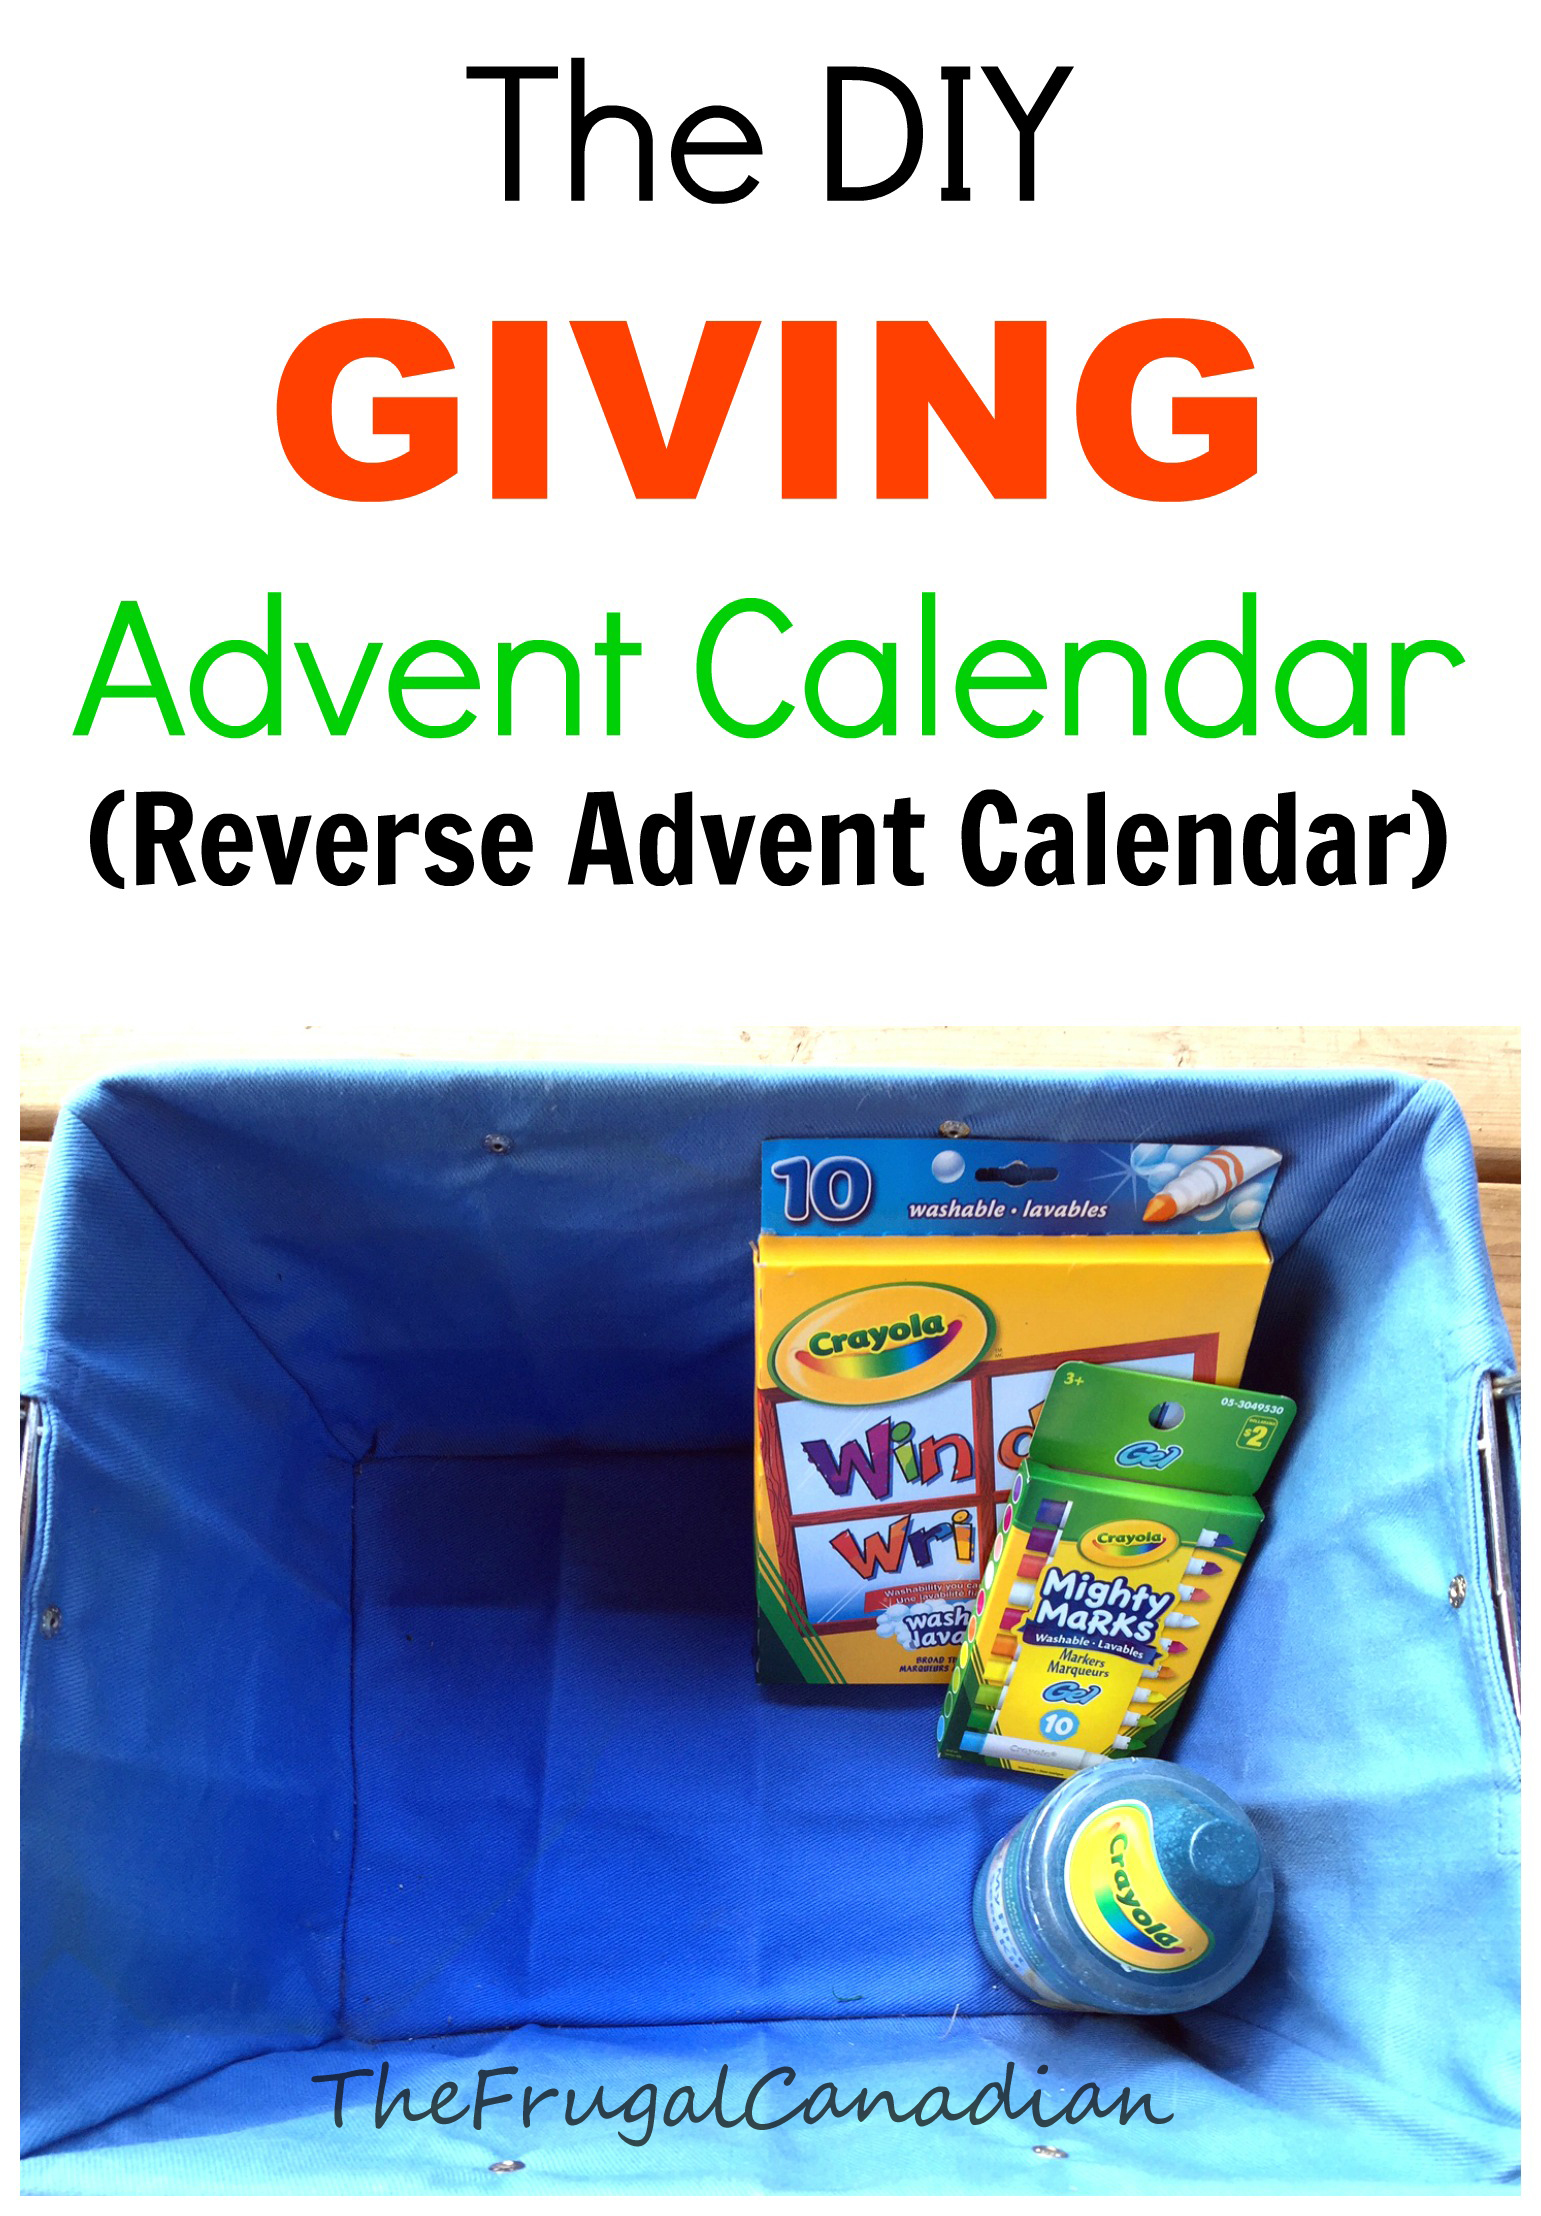 DIY Giving Advent Calendar Idea (Reverse Advent Calendar)